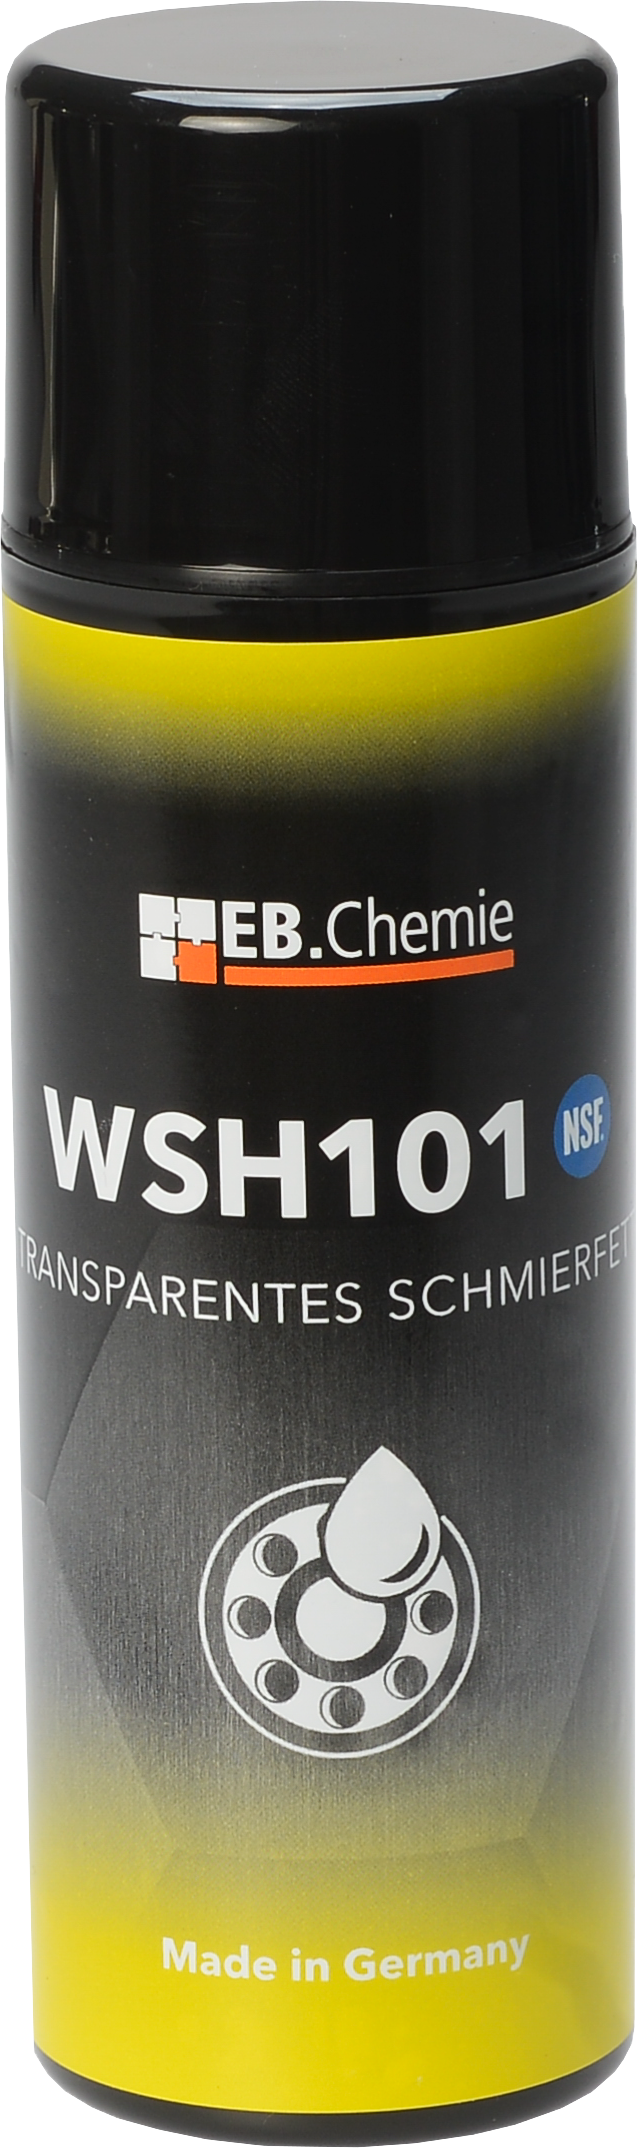 WSH101 - Transparentes Schmierfett